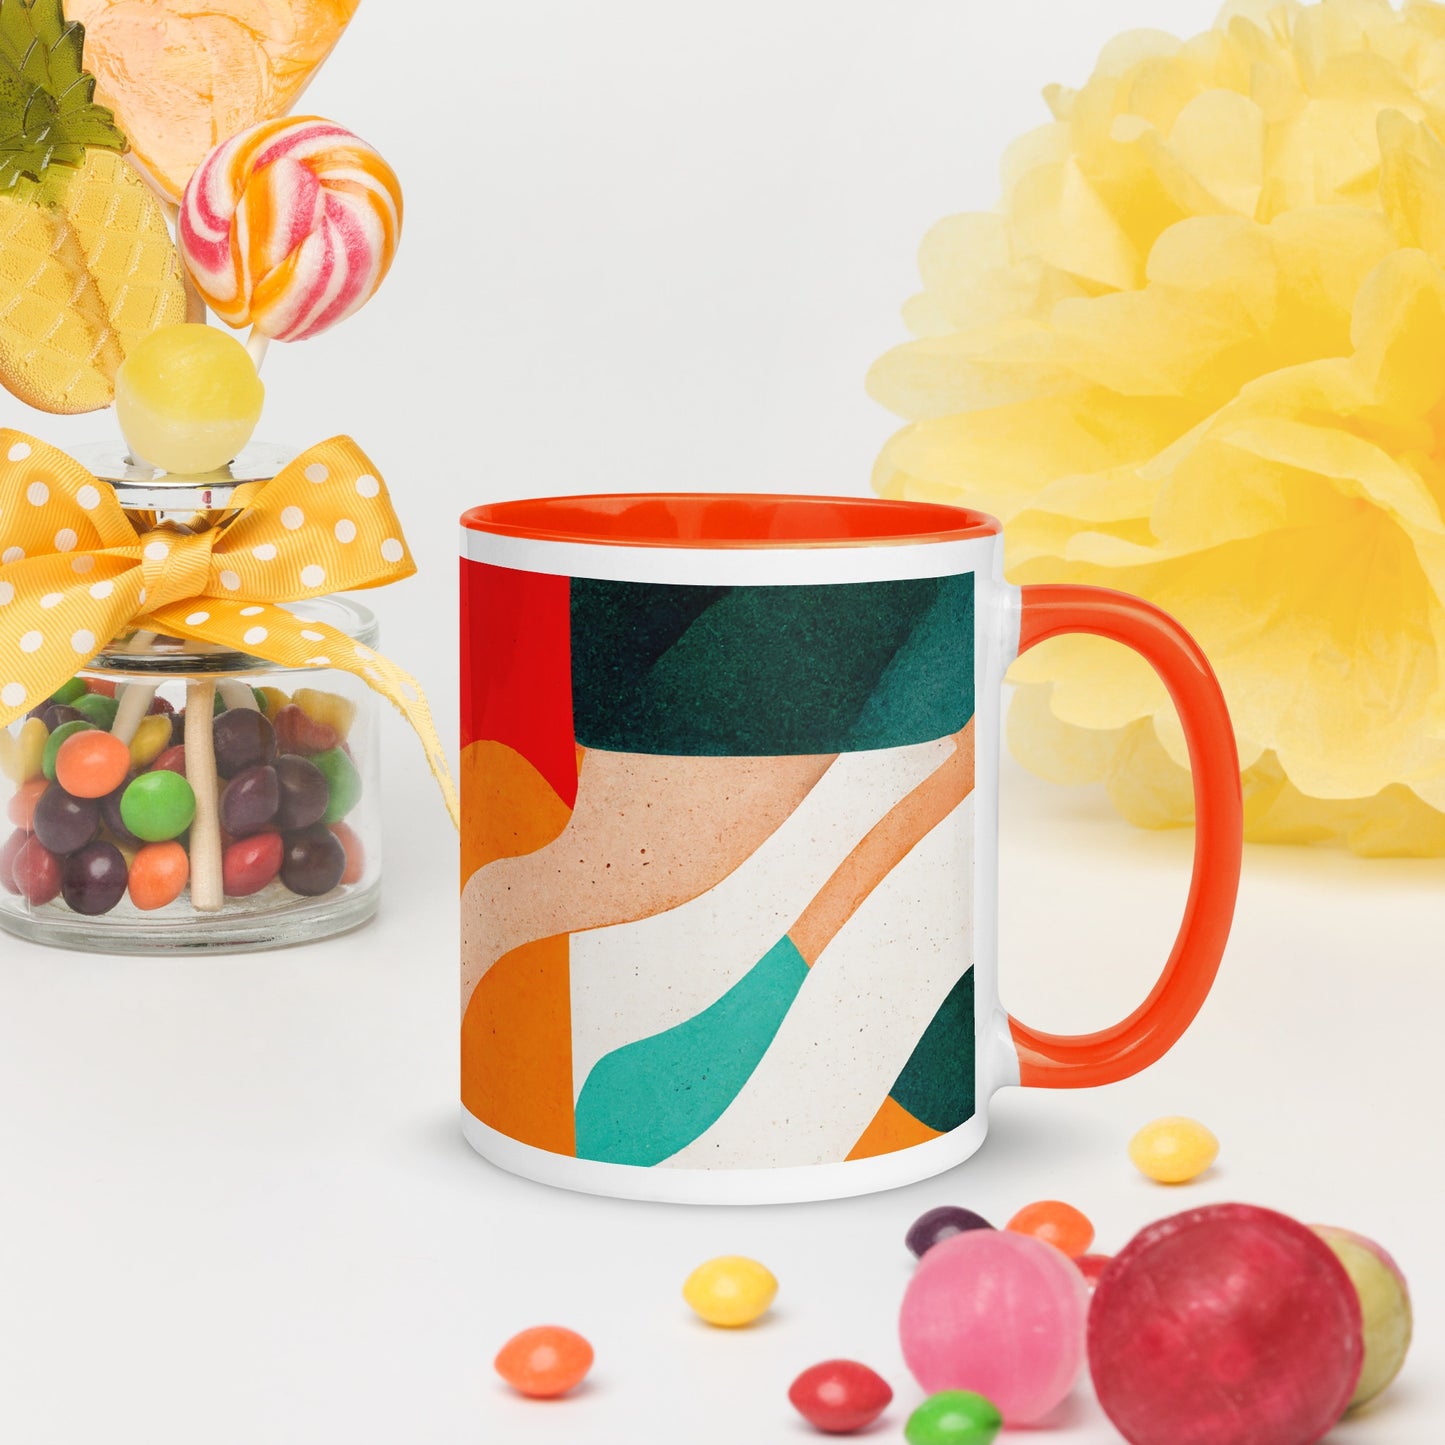 Jelly Bread Ceramic Mug with Color Inside